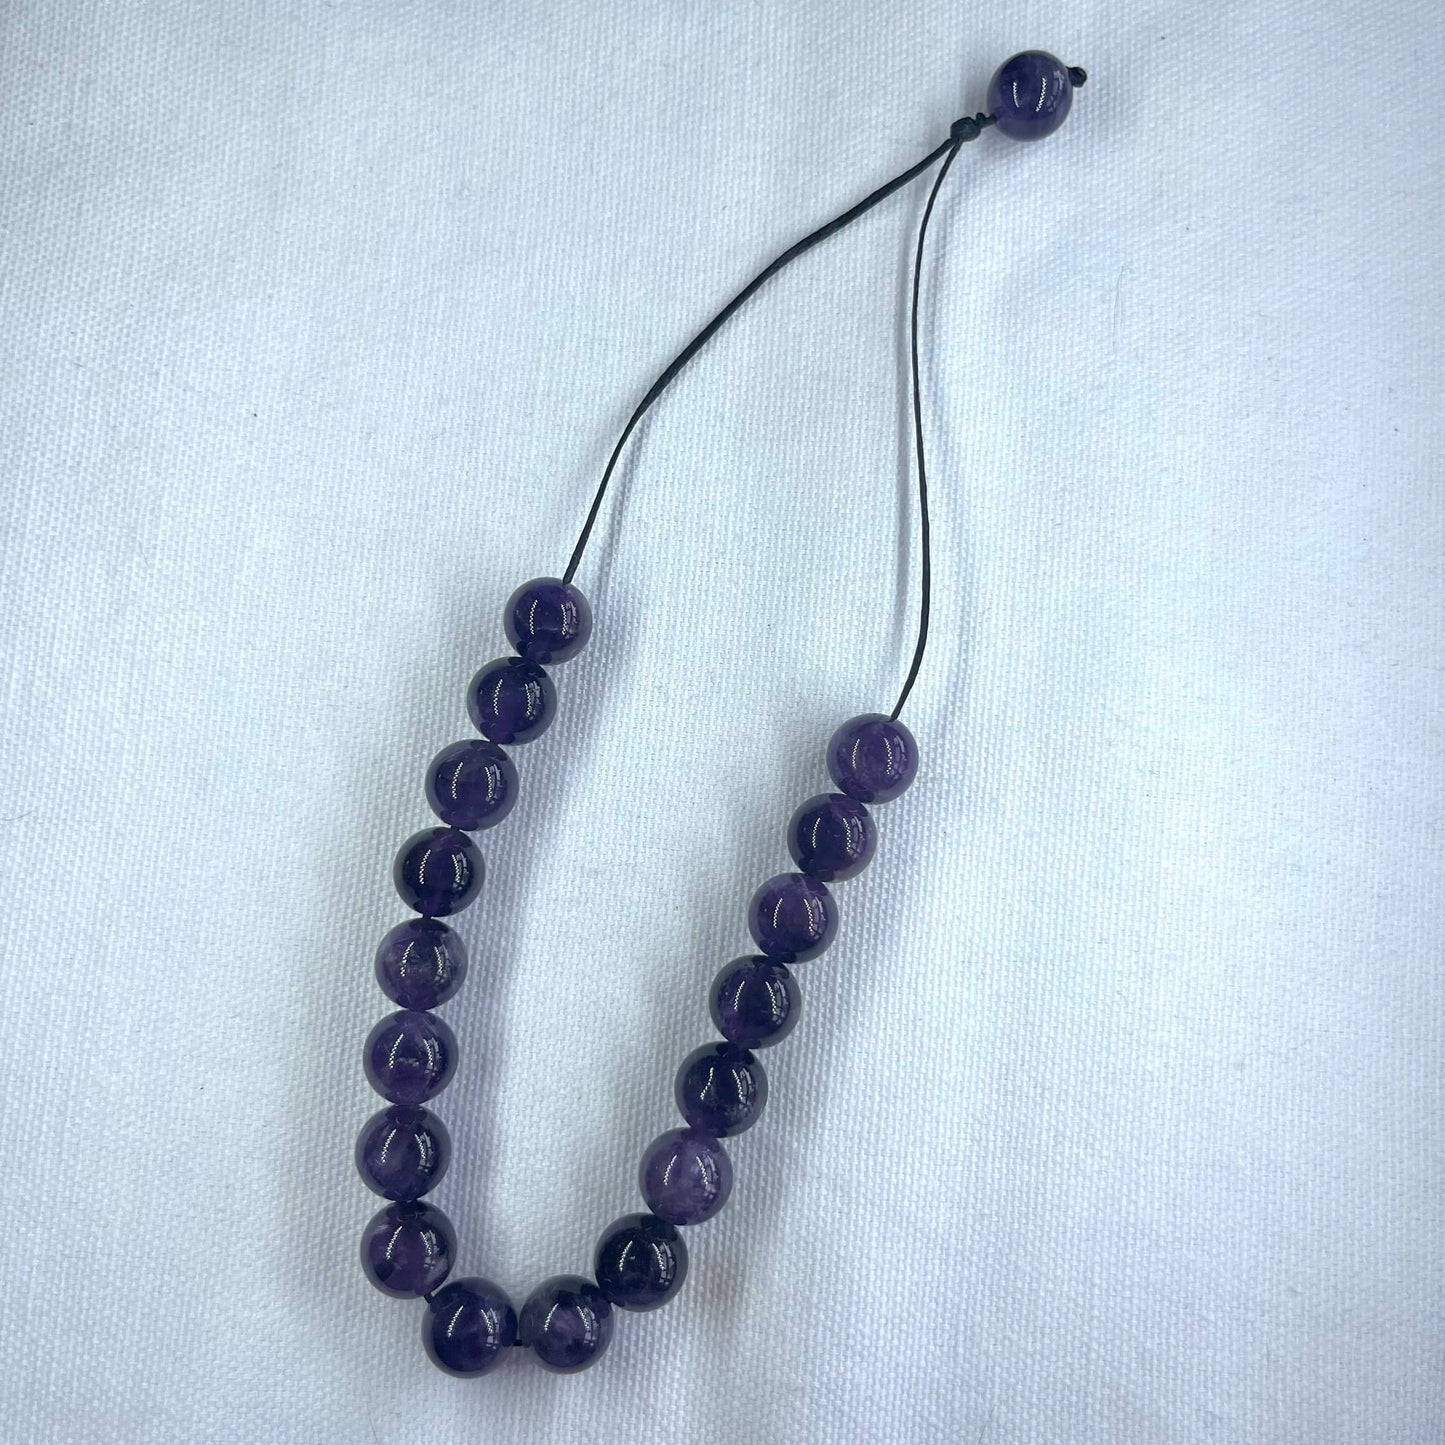 Komboloi Worry Beads - Amethyst